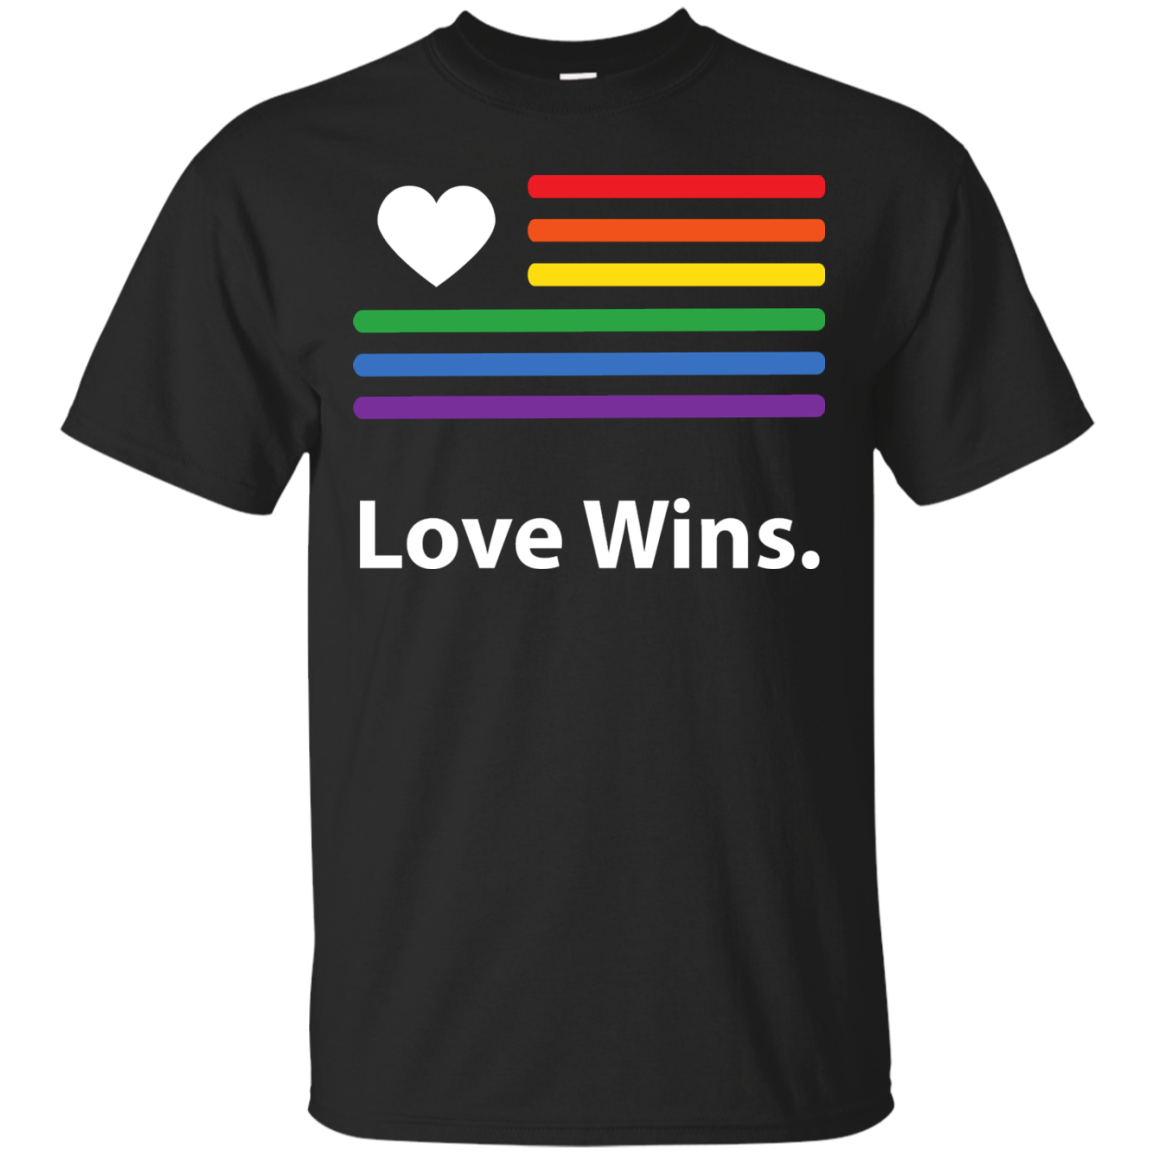 "LGBT Flag Love Wins" Black Pride Shirt for men LGBT Flag printed shirt 